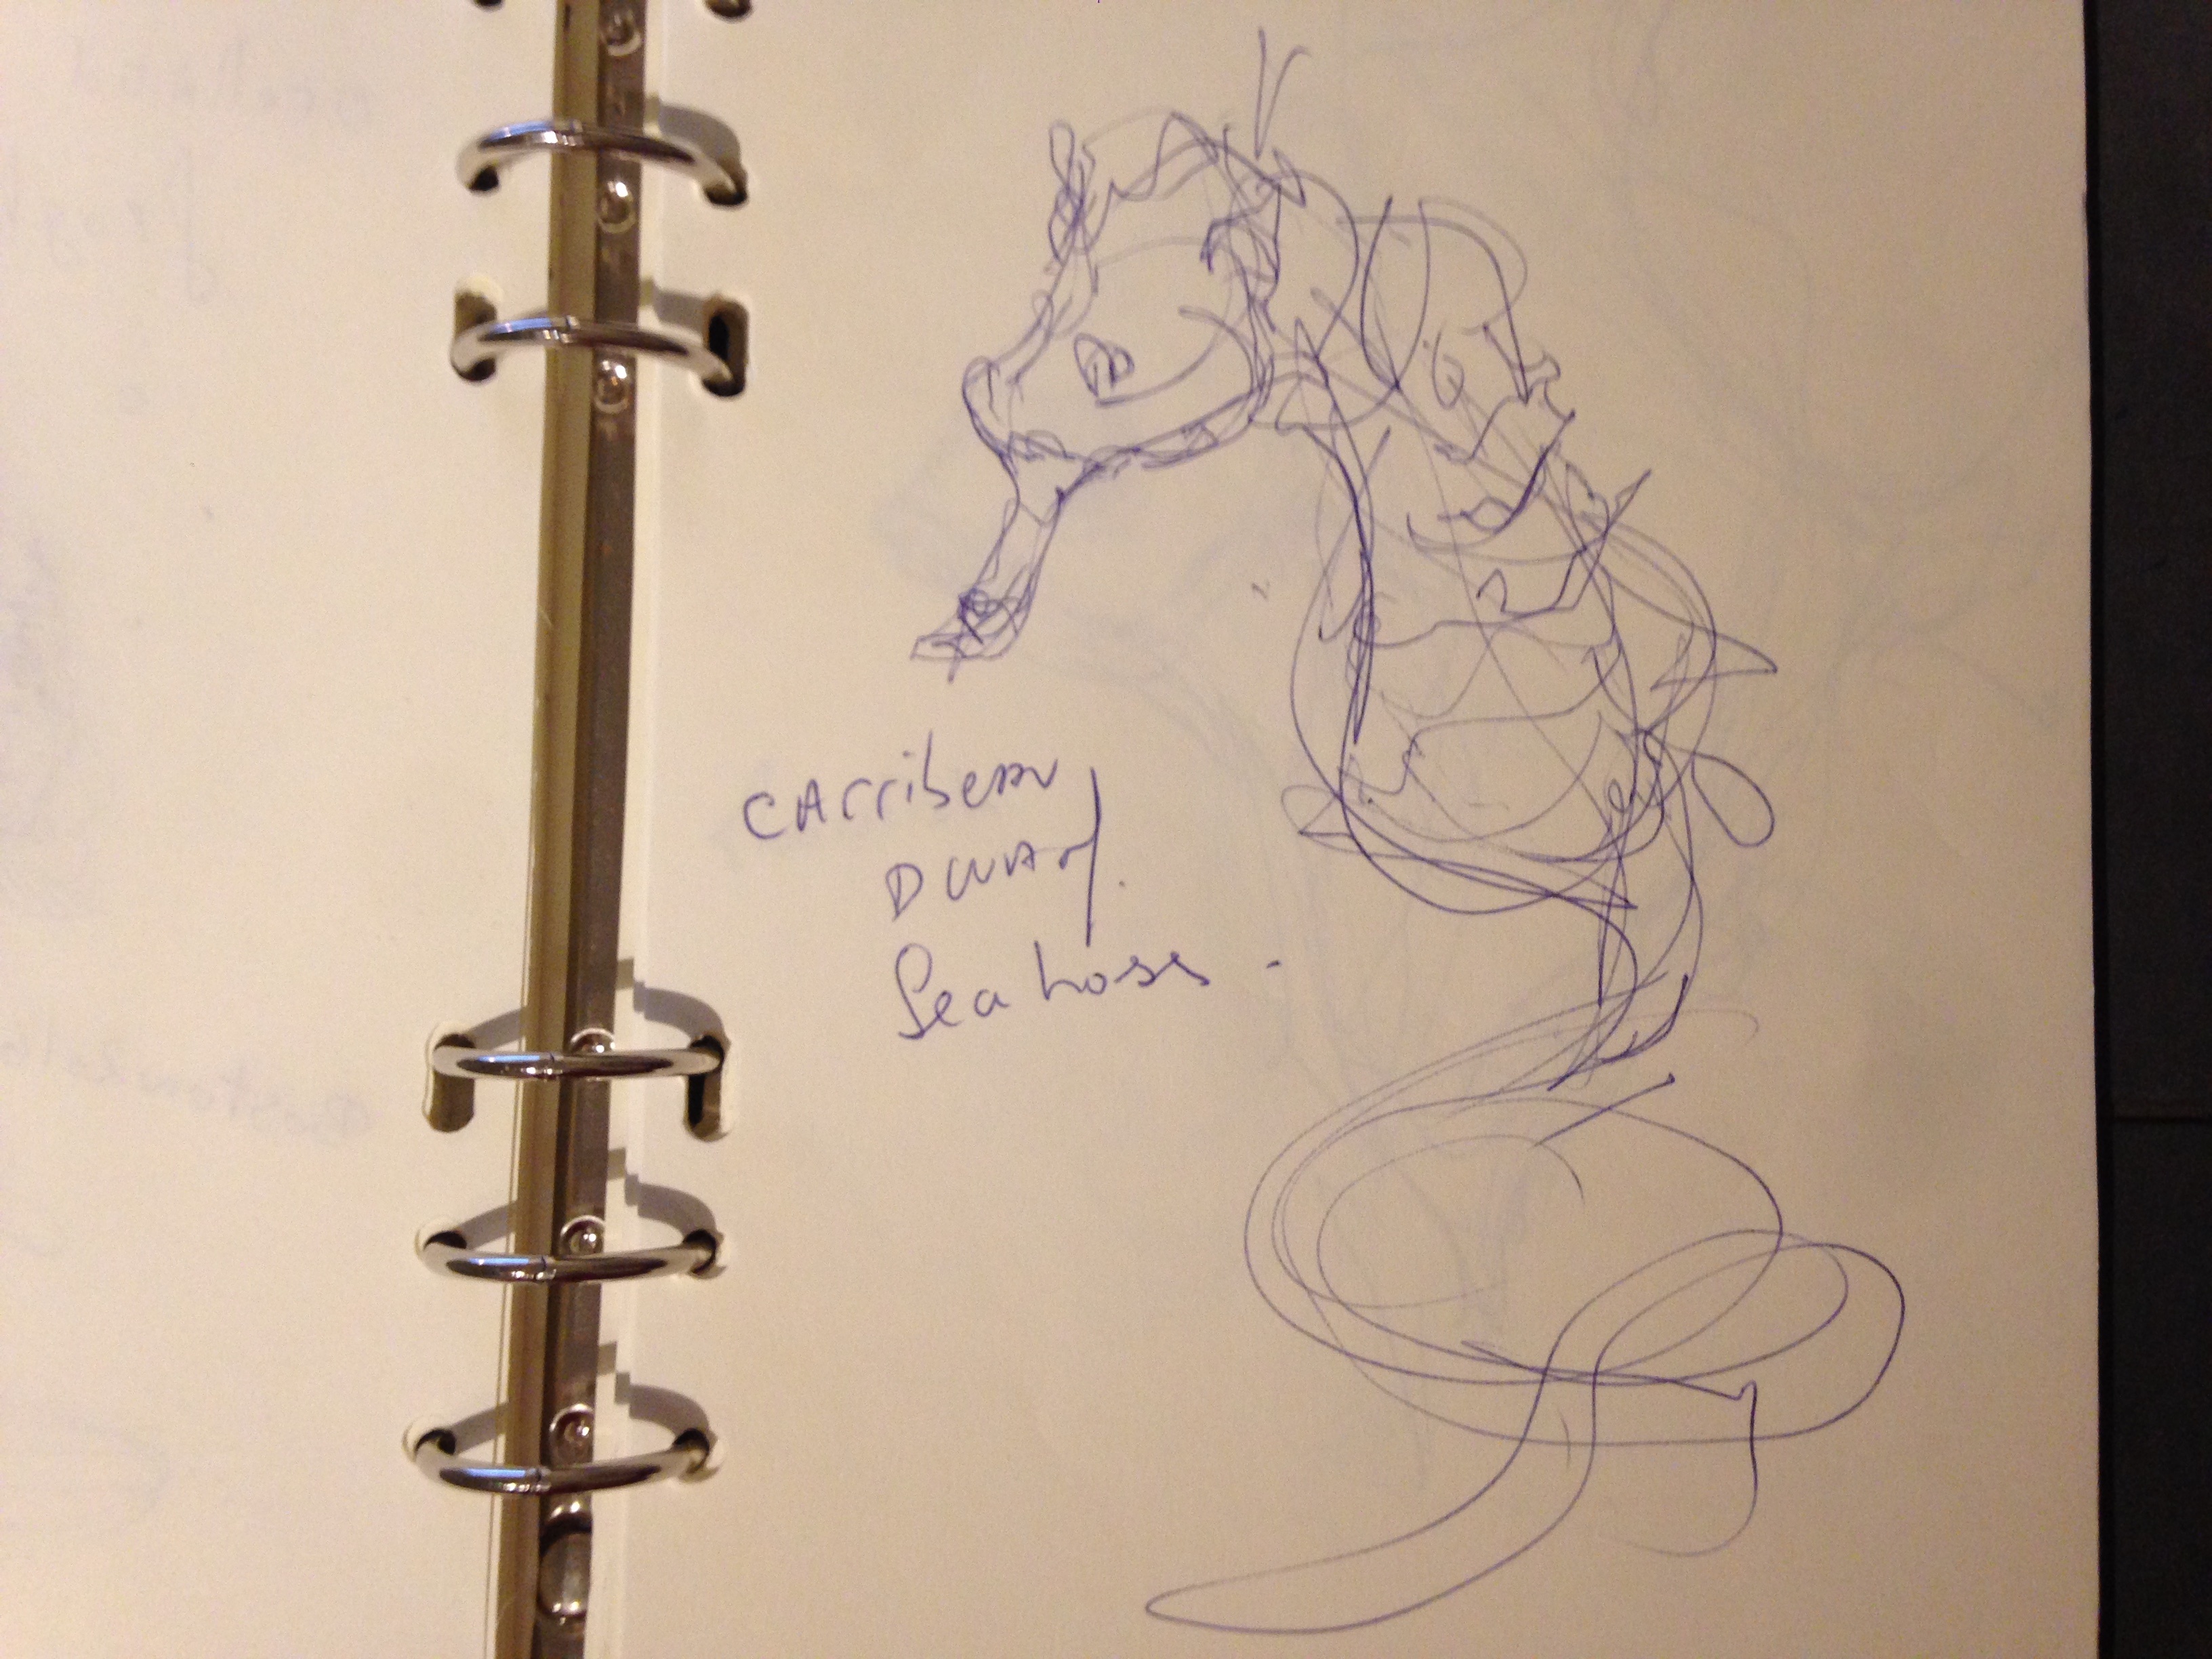 The design sketchbook sketch boston acquarium fish drawing ball point pen blue bic carribean dwarf seahorse